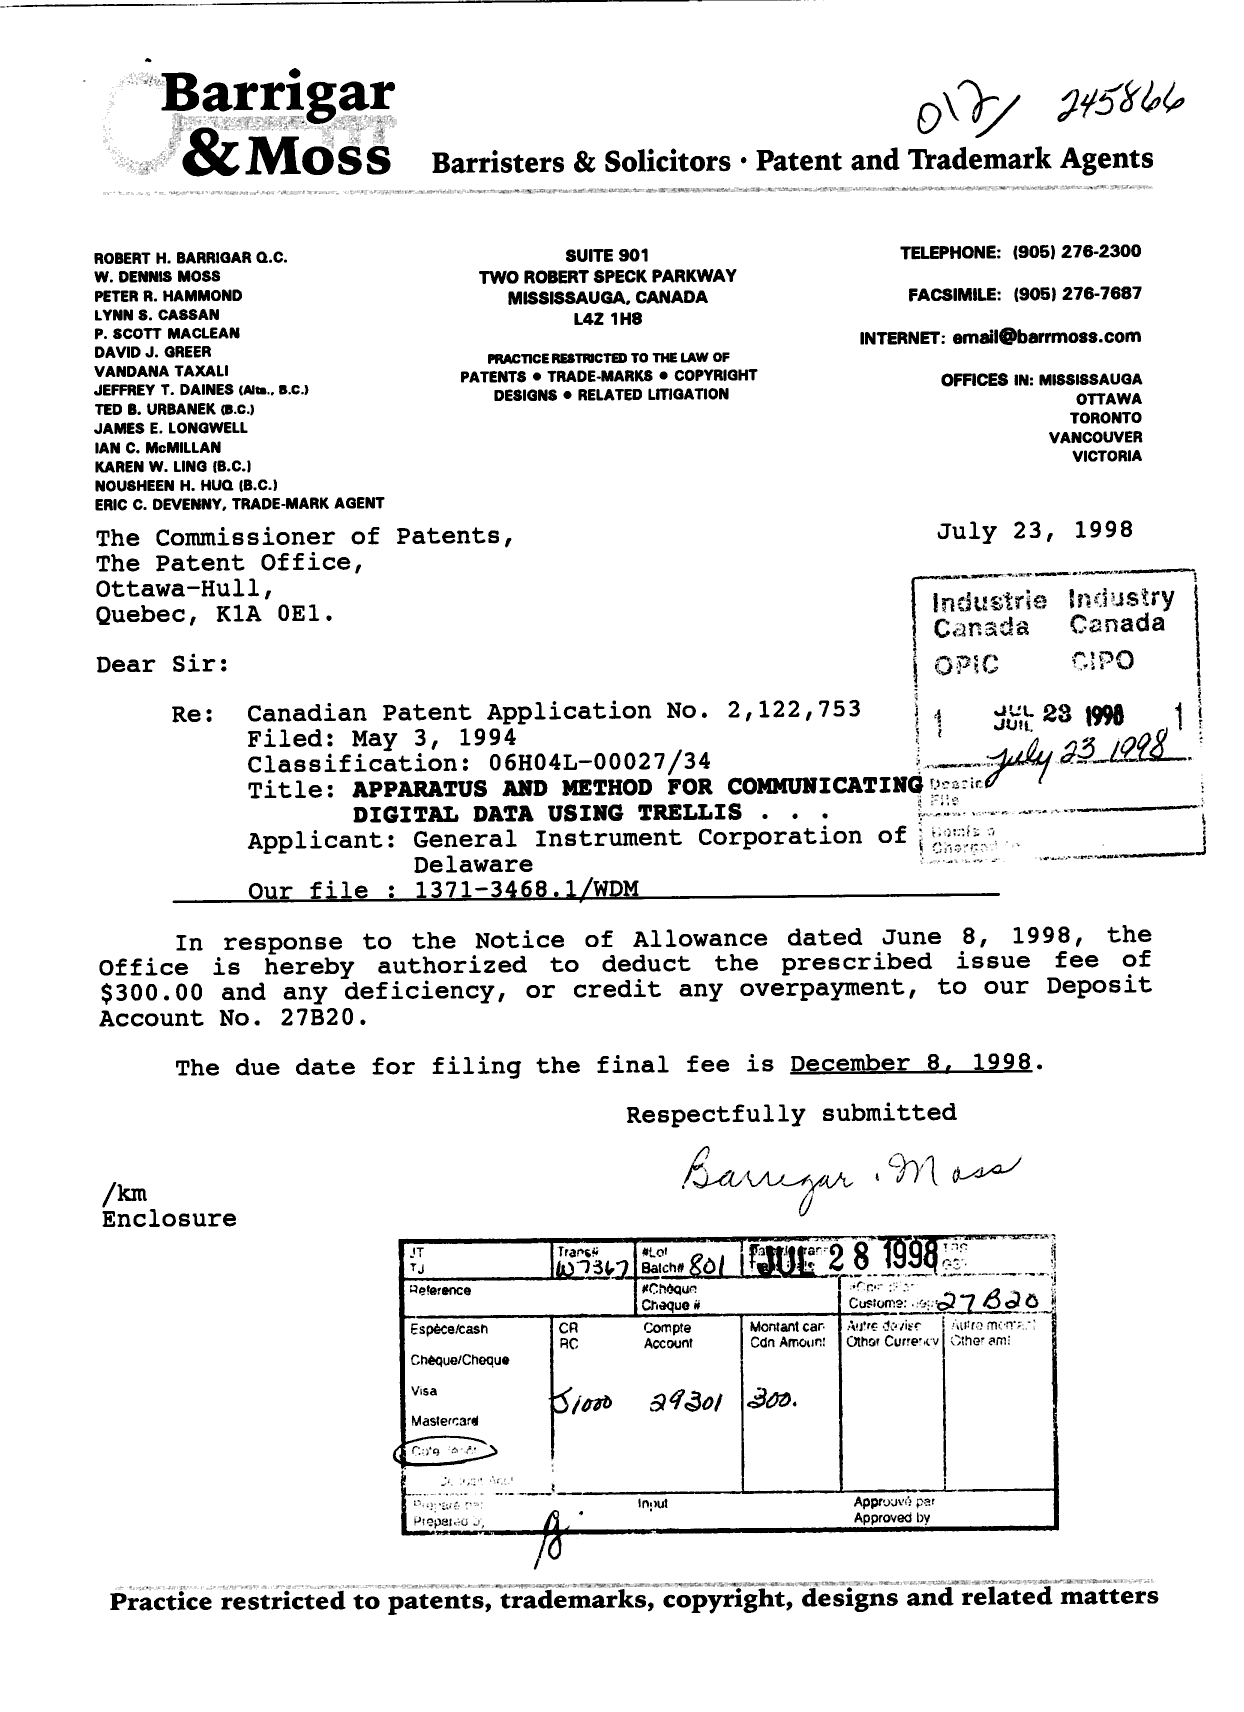 Canadian Patent Document 2122753. Correspondence 19971223. Image 1 of 1